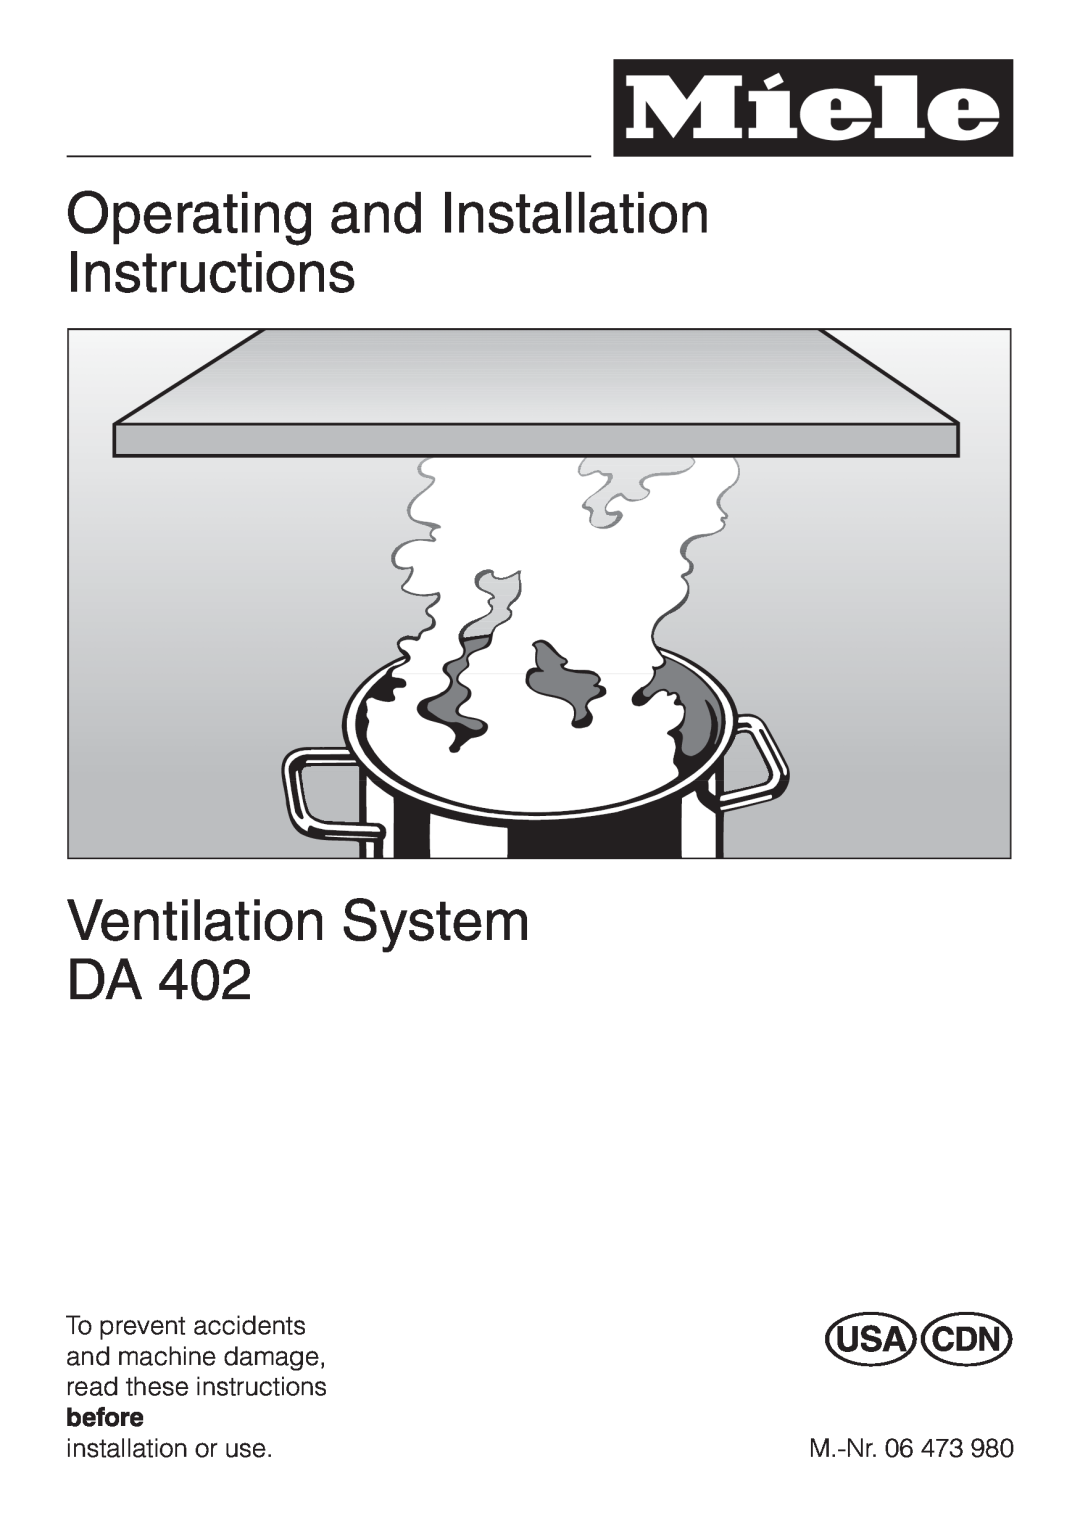 Miele DA 402 installation instructions Operating and Installation Instructions, Ventilation System DA 